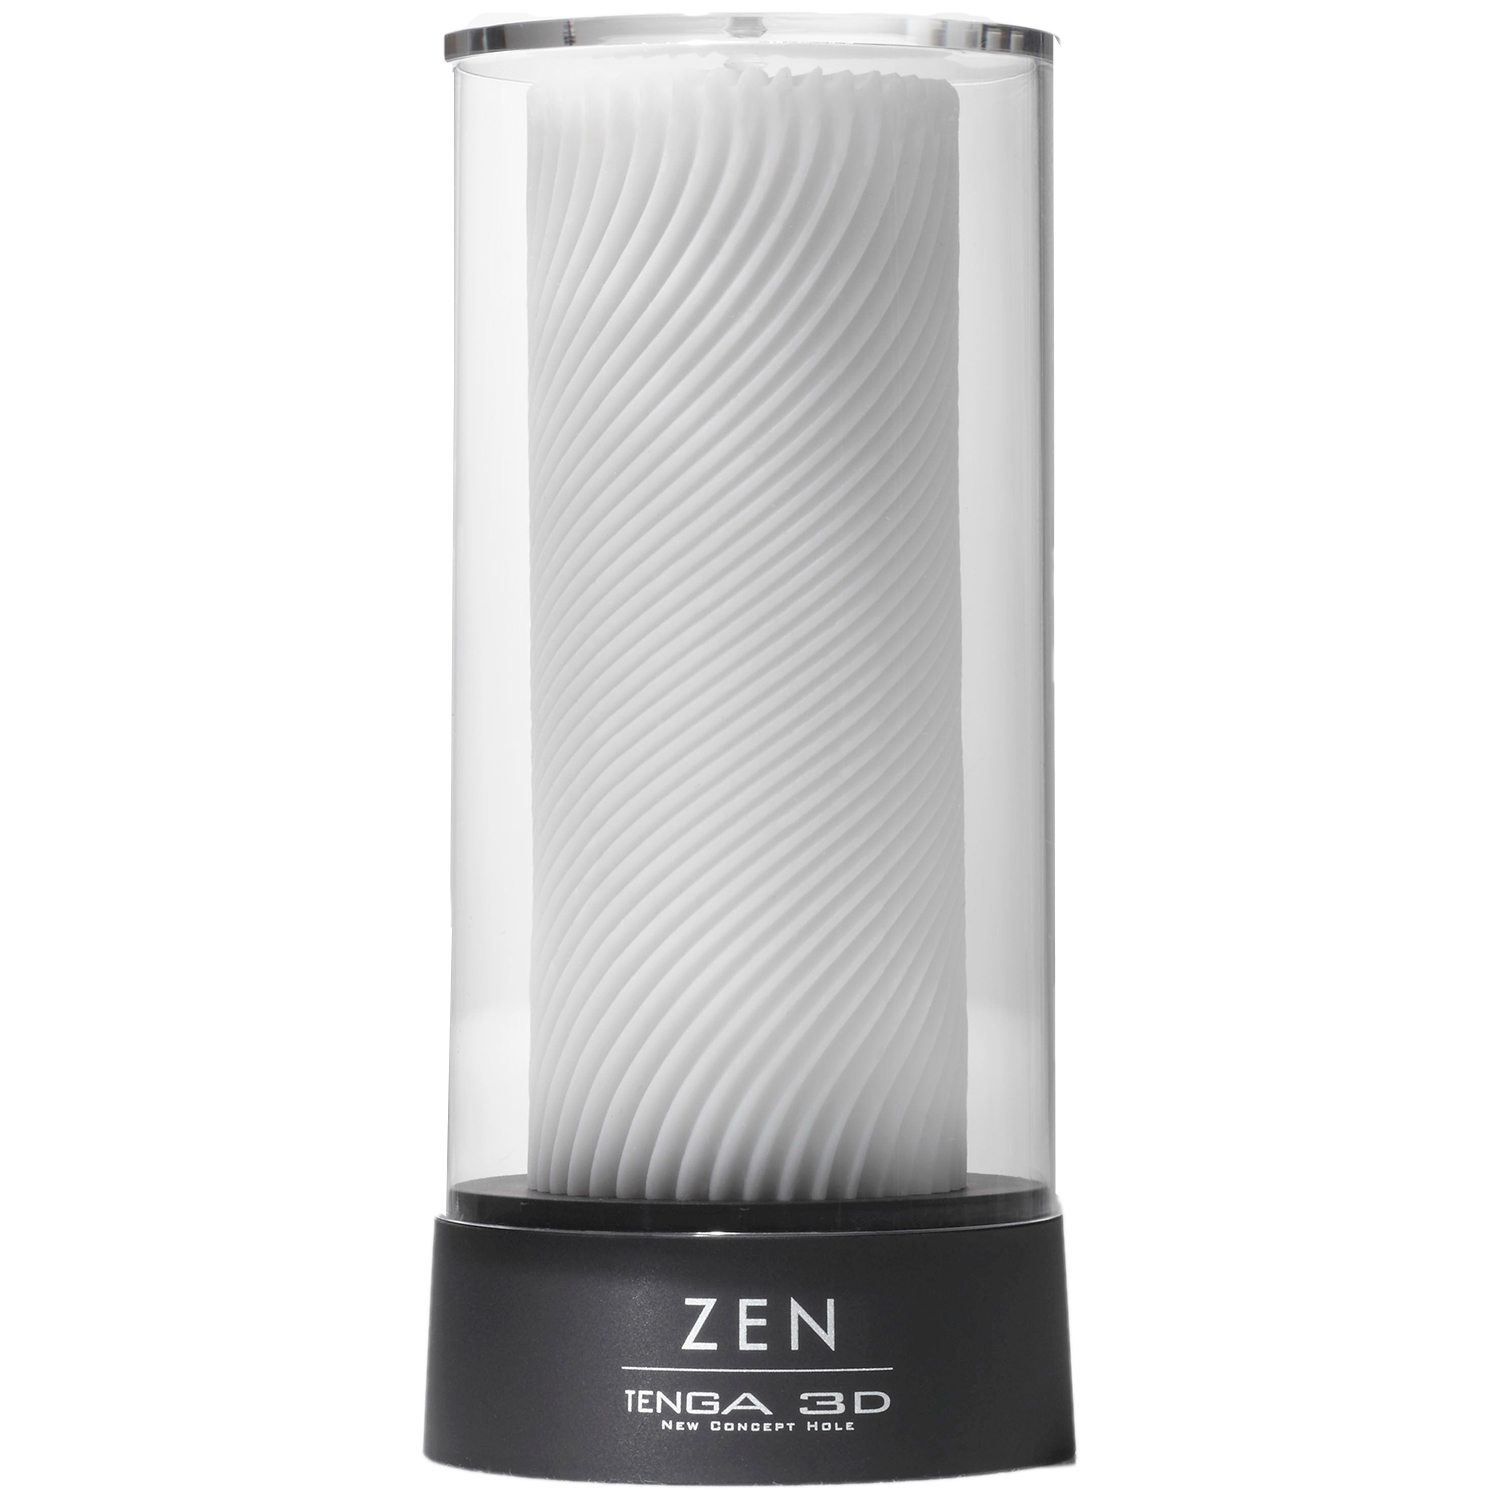 TENGA 3D Zen Onaniprodukt - Vit